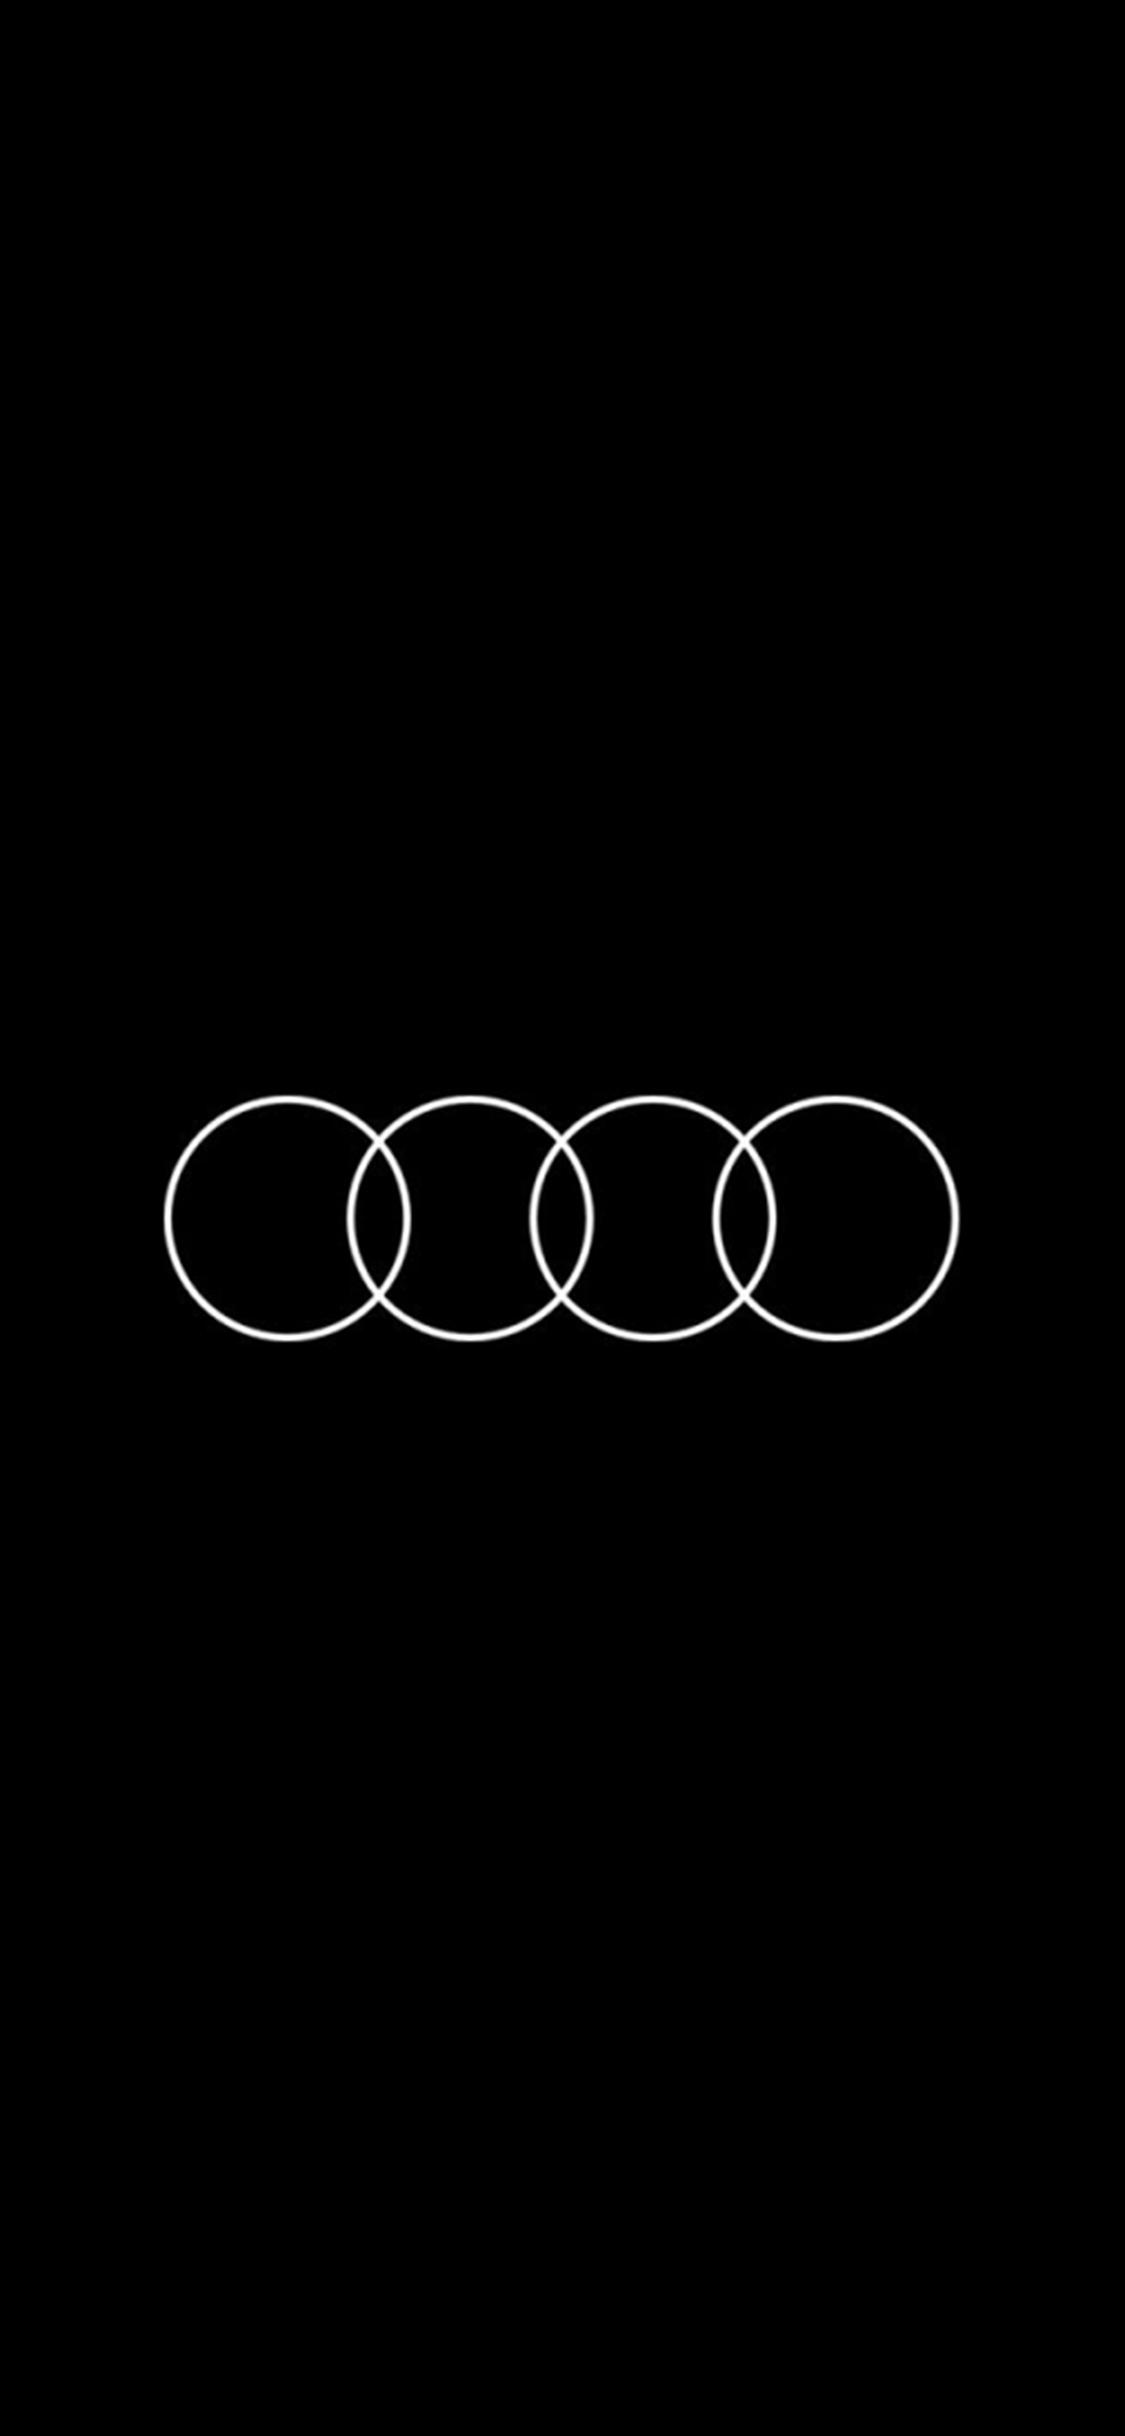 Audi logo hd iphone wallpapers